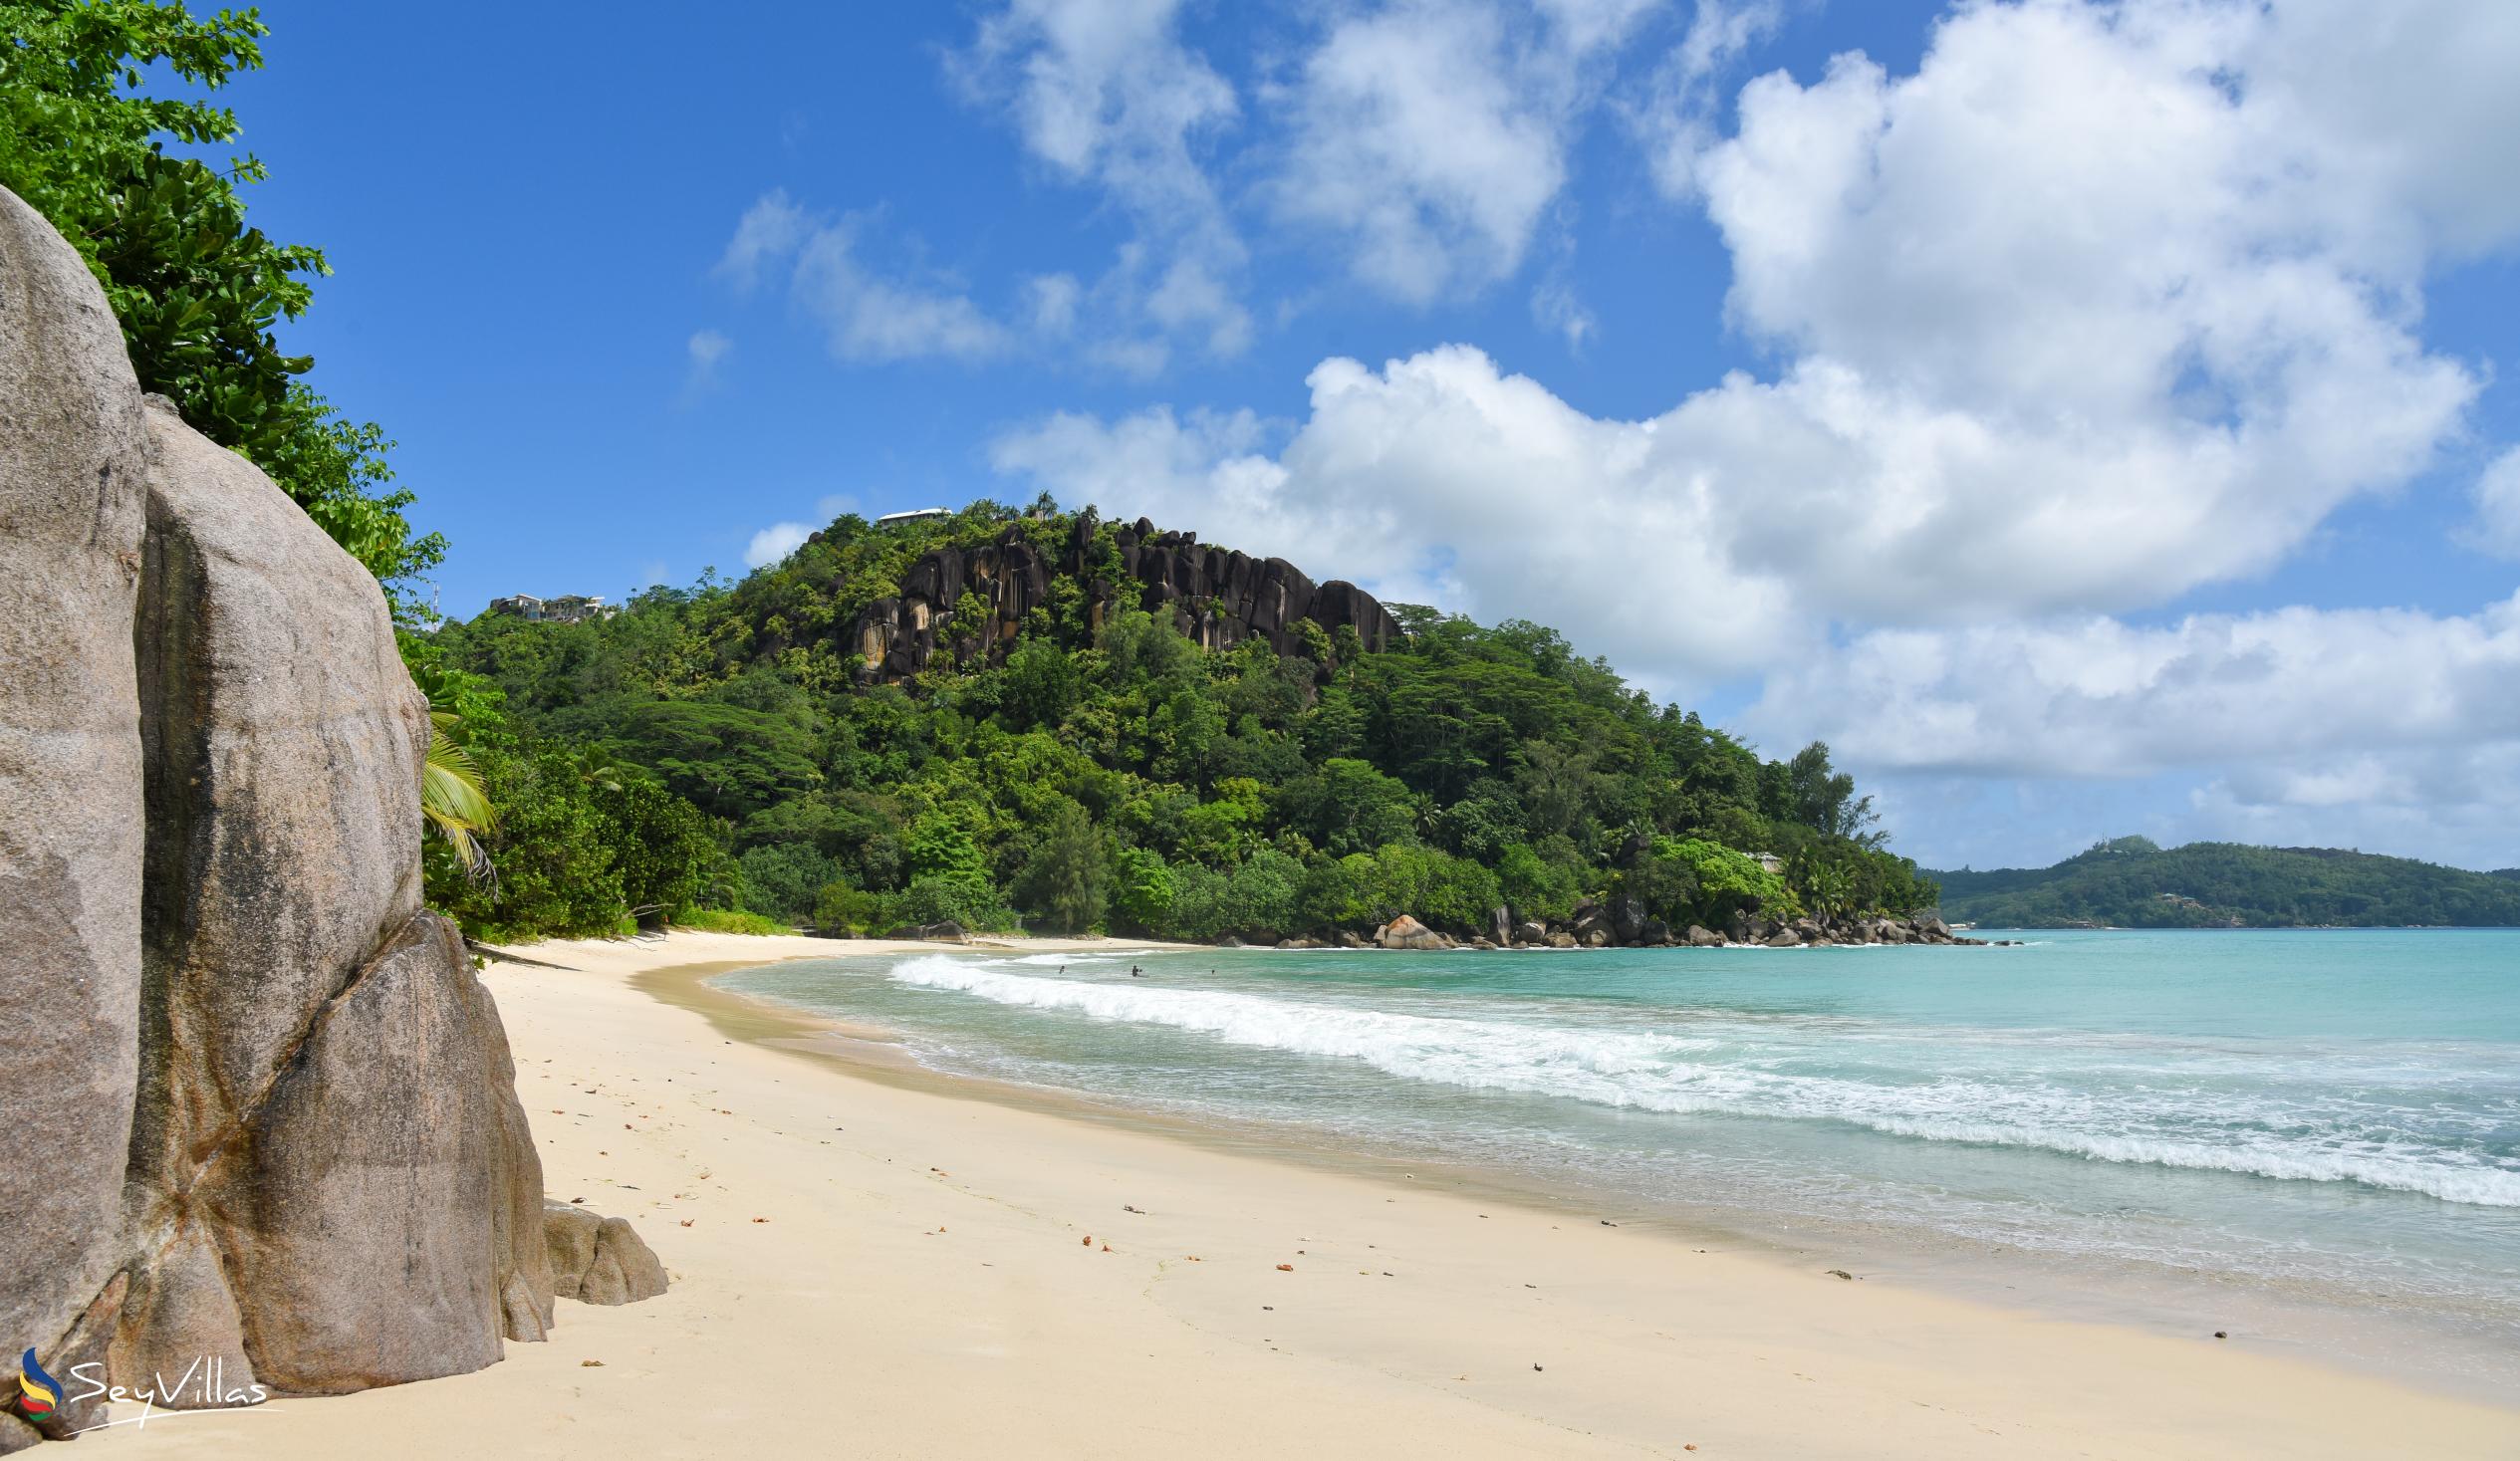 Photo 6: Anse Louis - Mahé (Seychelles)